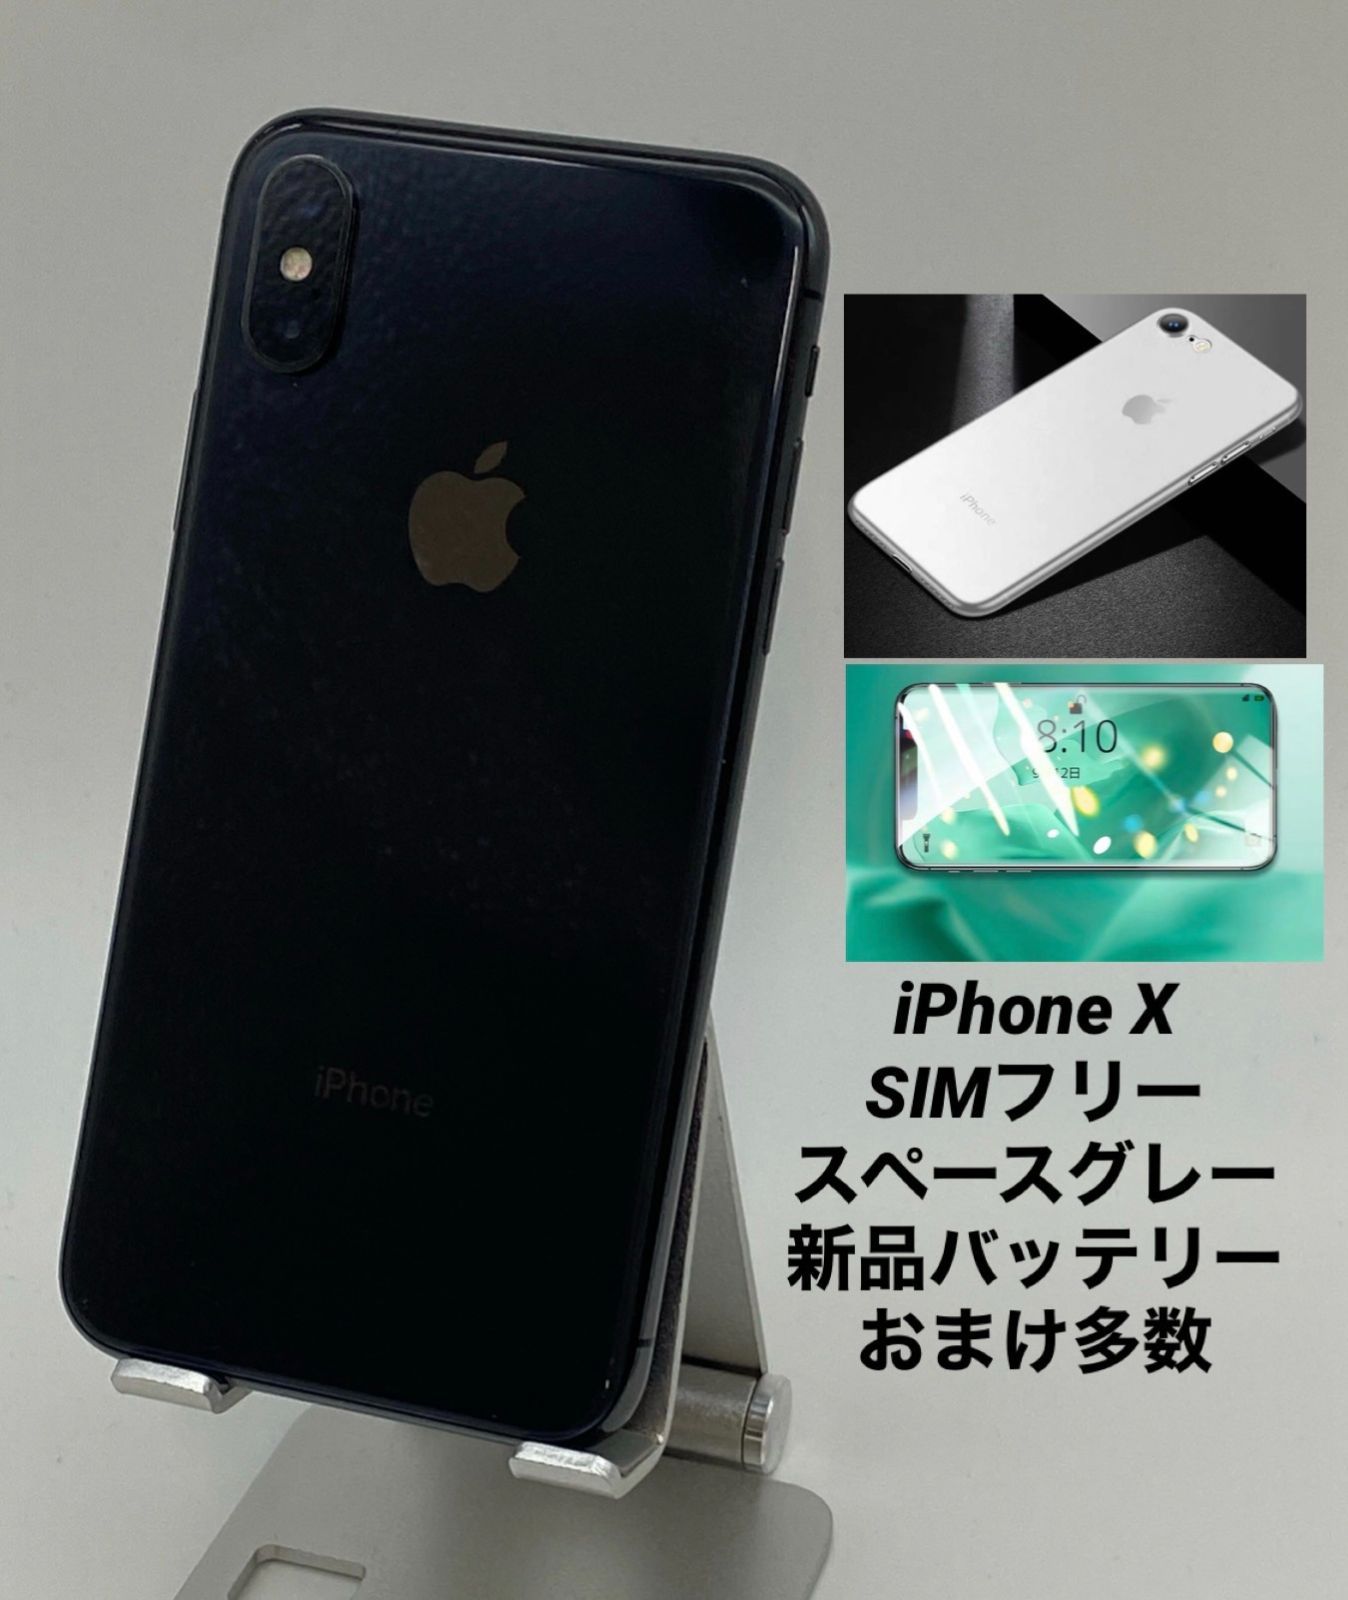 iPhoneX SIMフリー 新品バッテリー - スマートフォン本体